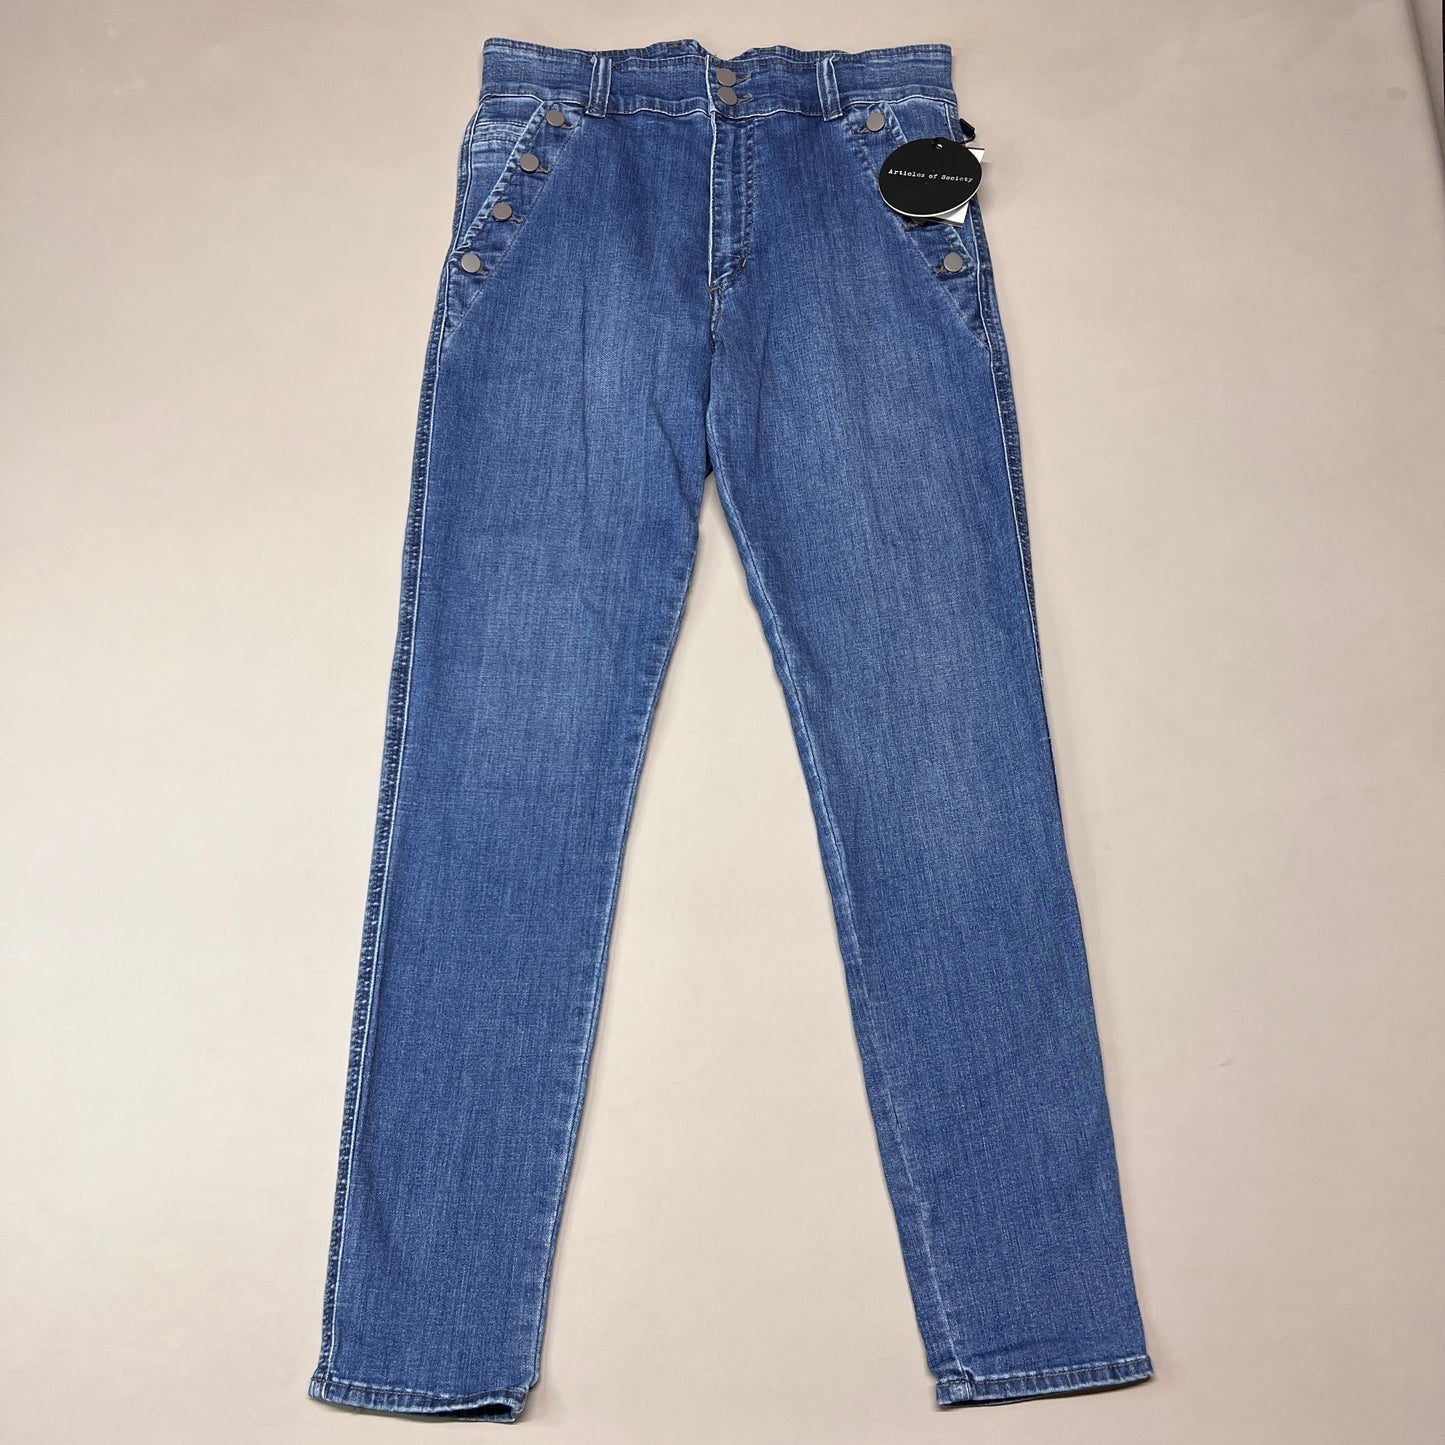 ARTICLES OF SOCIETY Village Park Denim Jeans Women's Sz 31 Blue 4488PLV-731 (New)